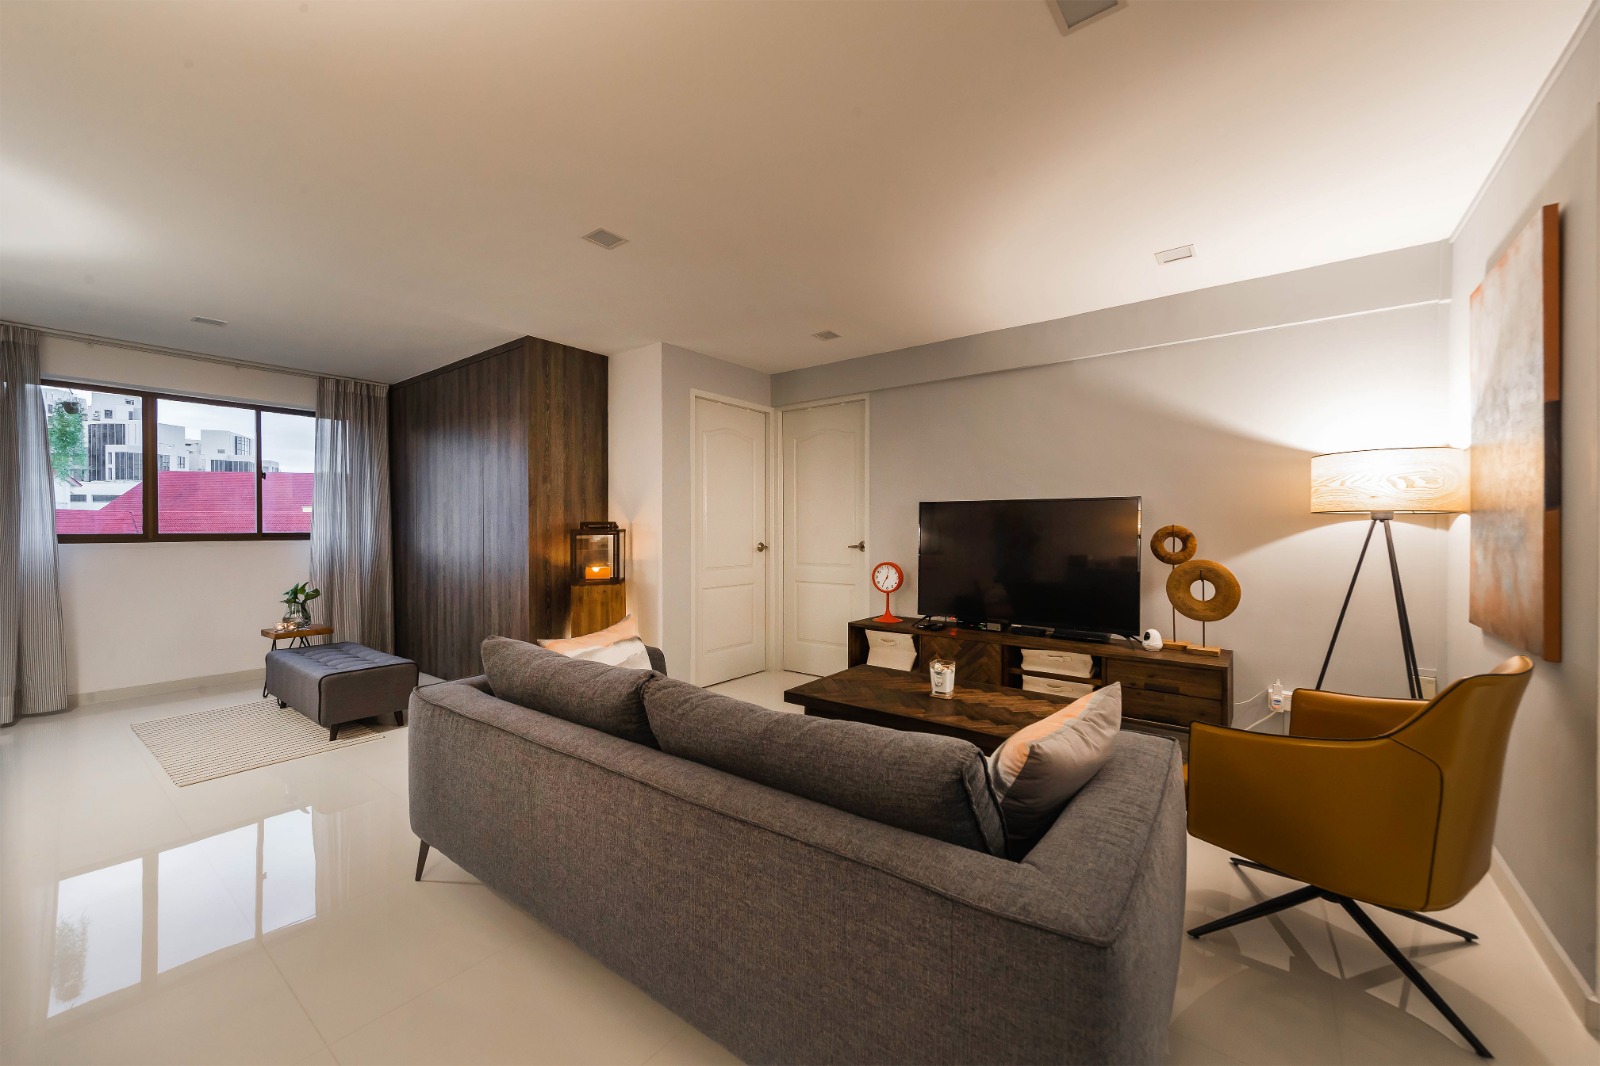 Eclectic, Retro Design - Living Room - HDB 4 Room - Design by Renozone Interior Design House